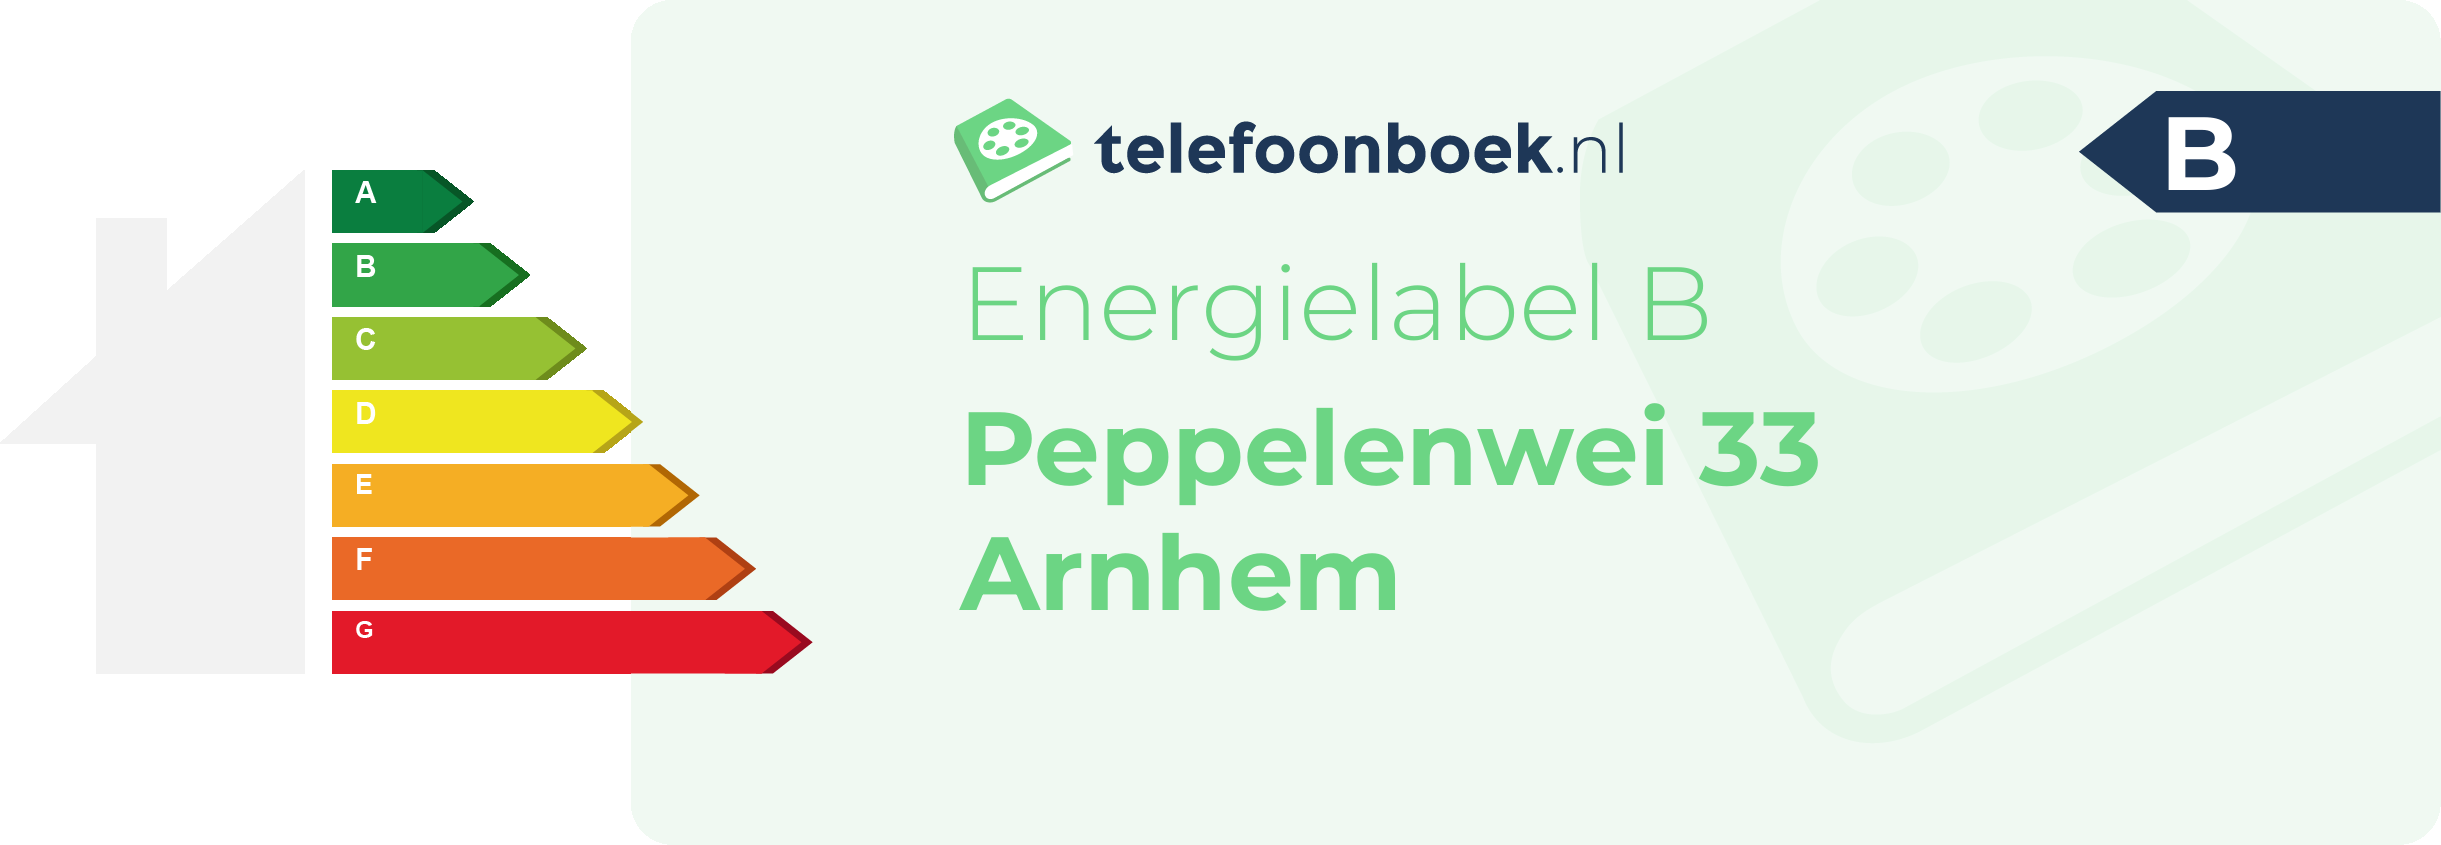 Energielabel Peppelenwei 33 Arnhem